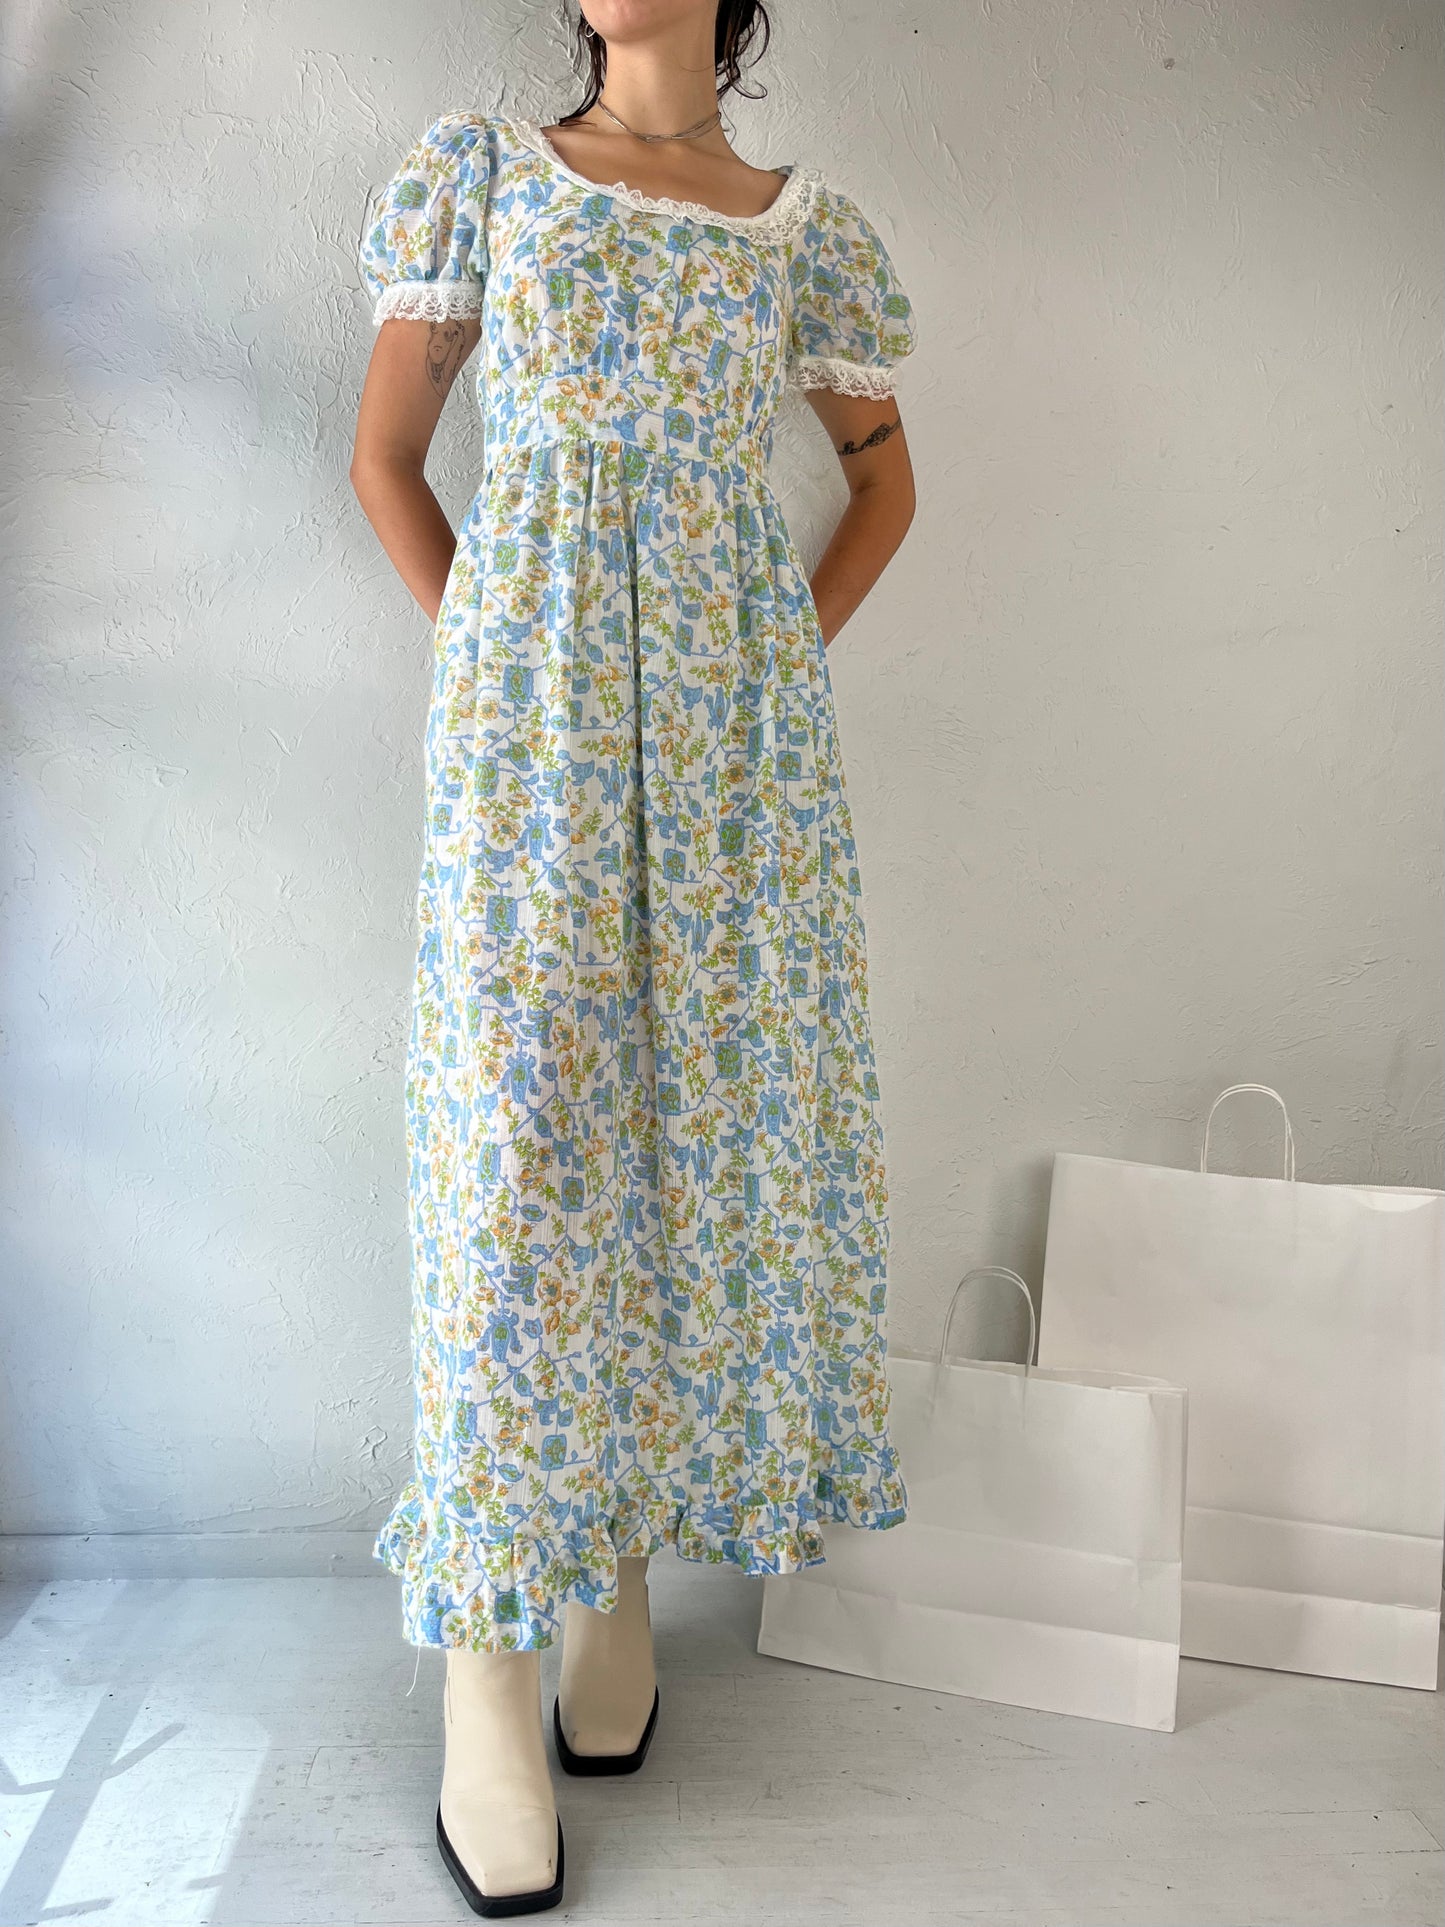 70s Handmade Blue Puff Sleeve Peasant Dress / Small - Medium